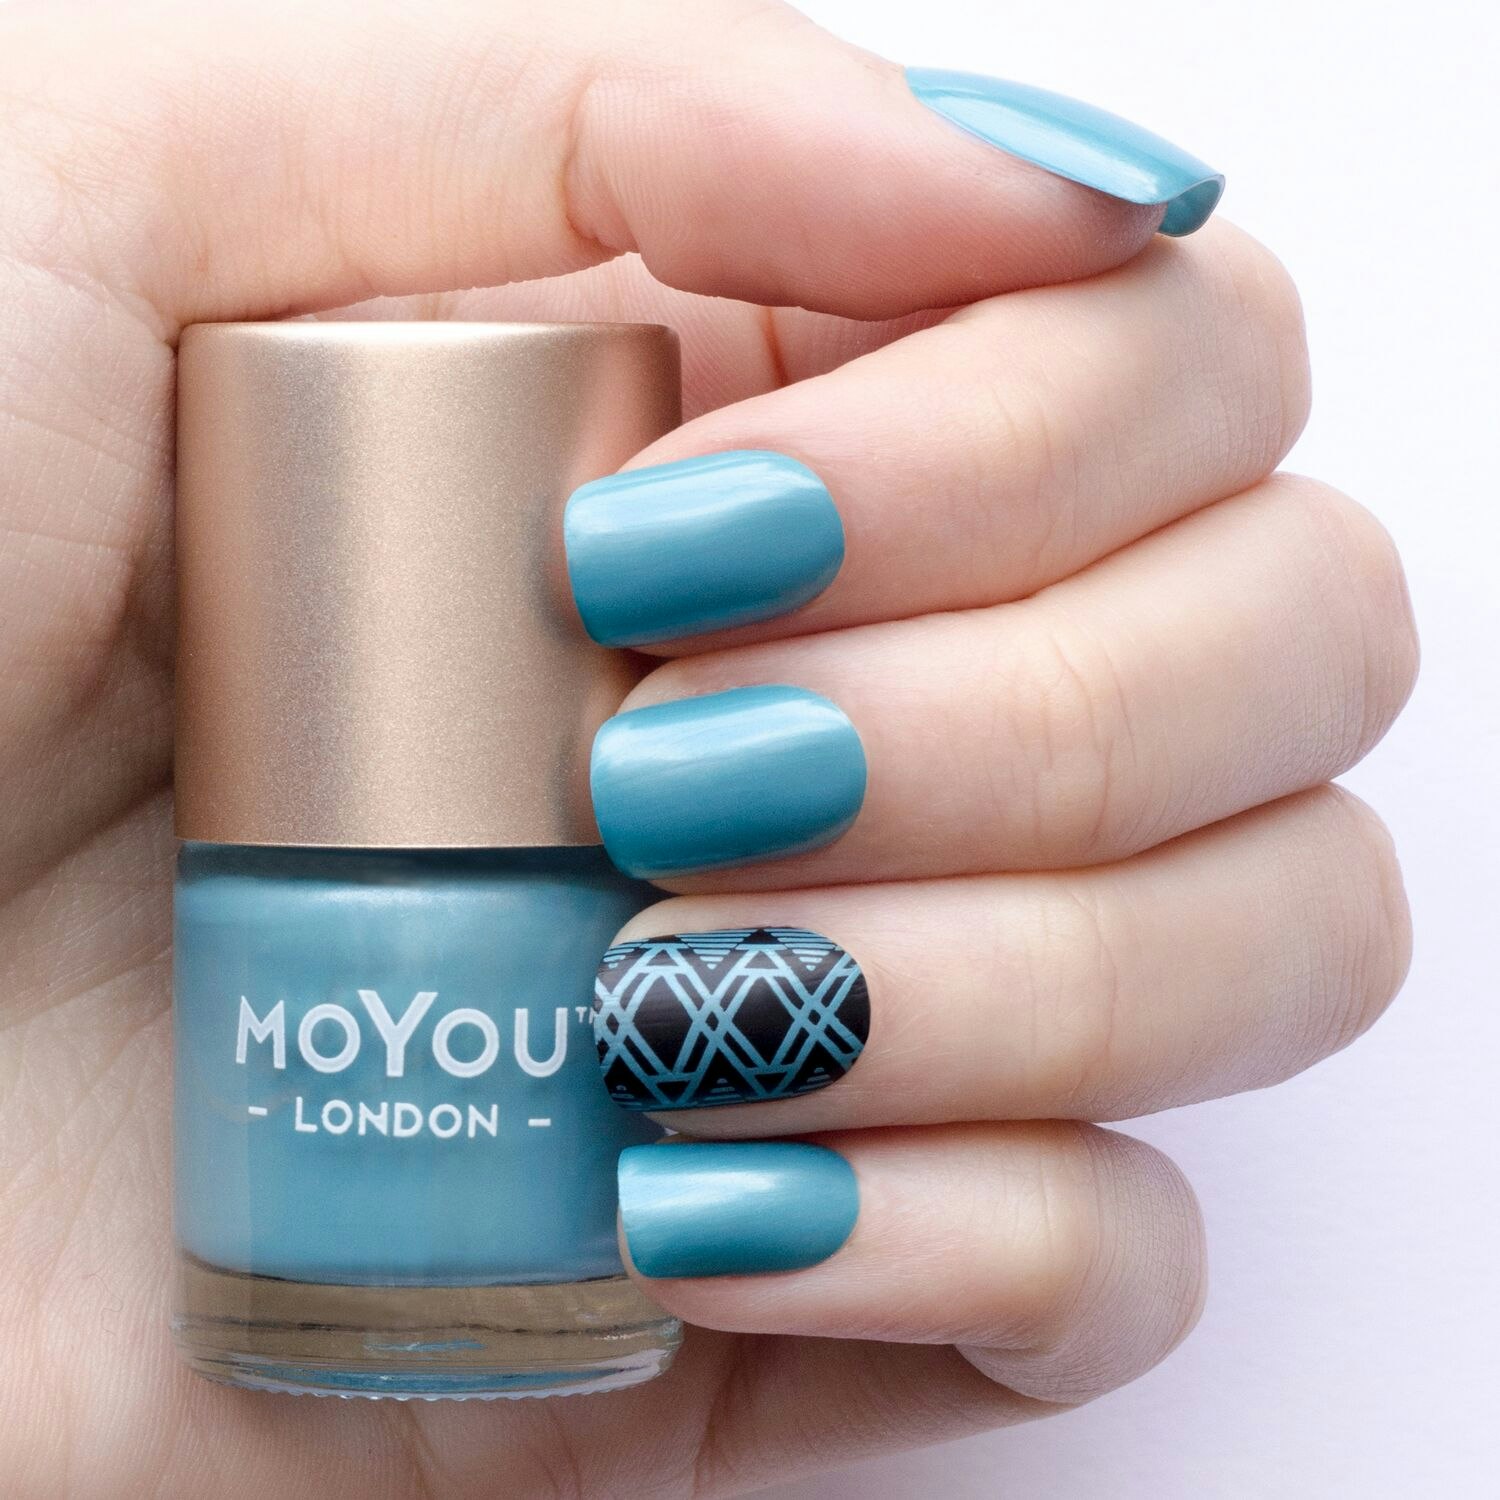 MoYou London Nail Art Stamping Polish 9 ml, Blue Whale